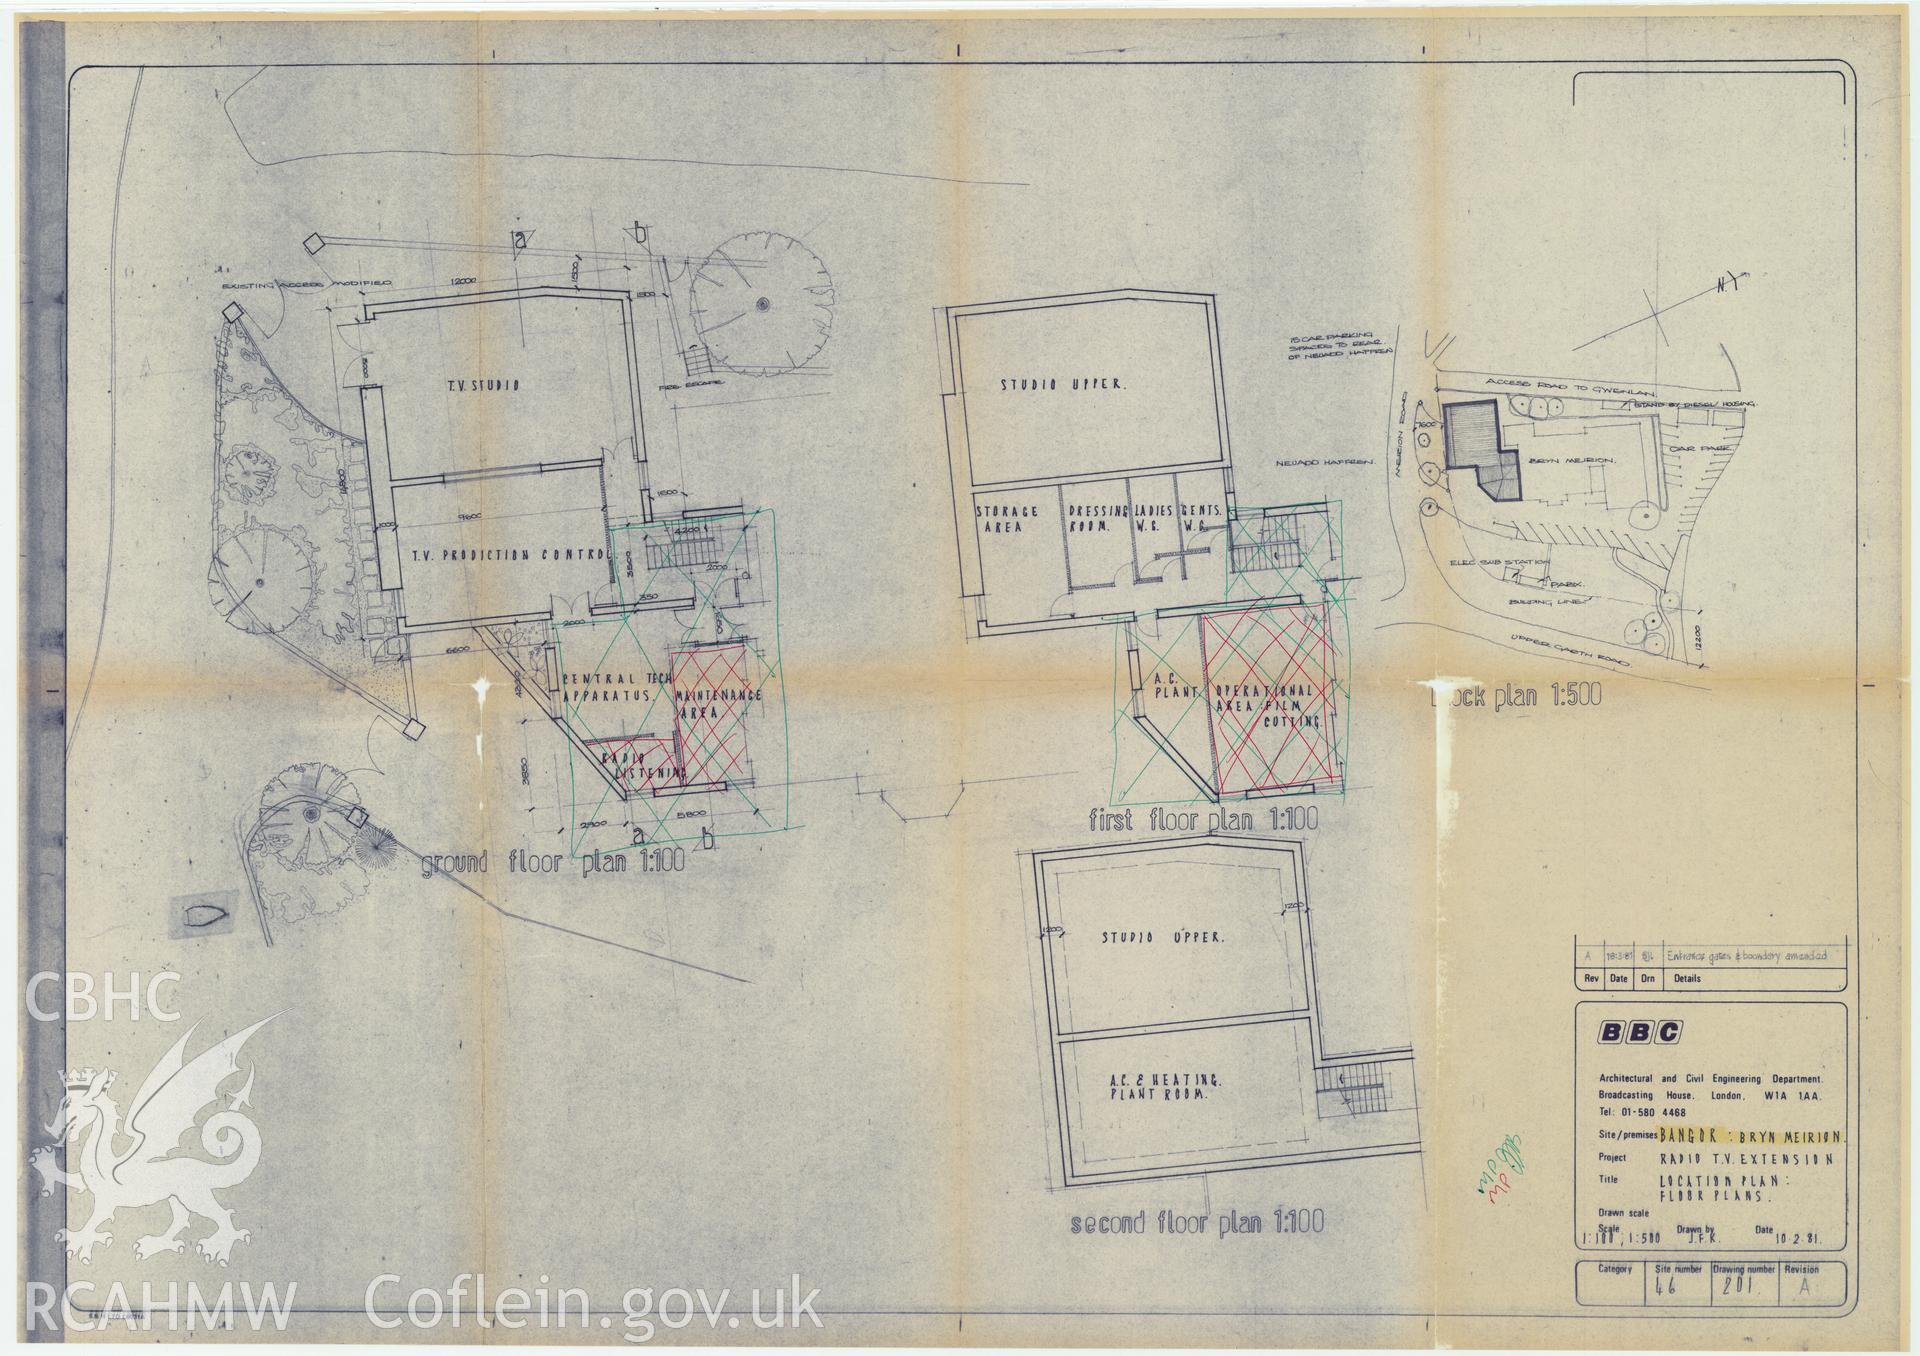 BBC premises, Bryn Meirion Bangor - block plan drawing of the Radio TV extension. Drawing No. 46/201 RevA, February 1981.